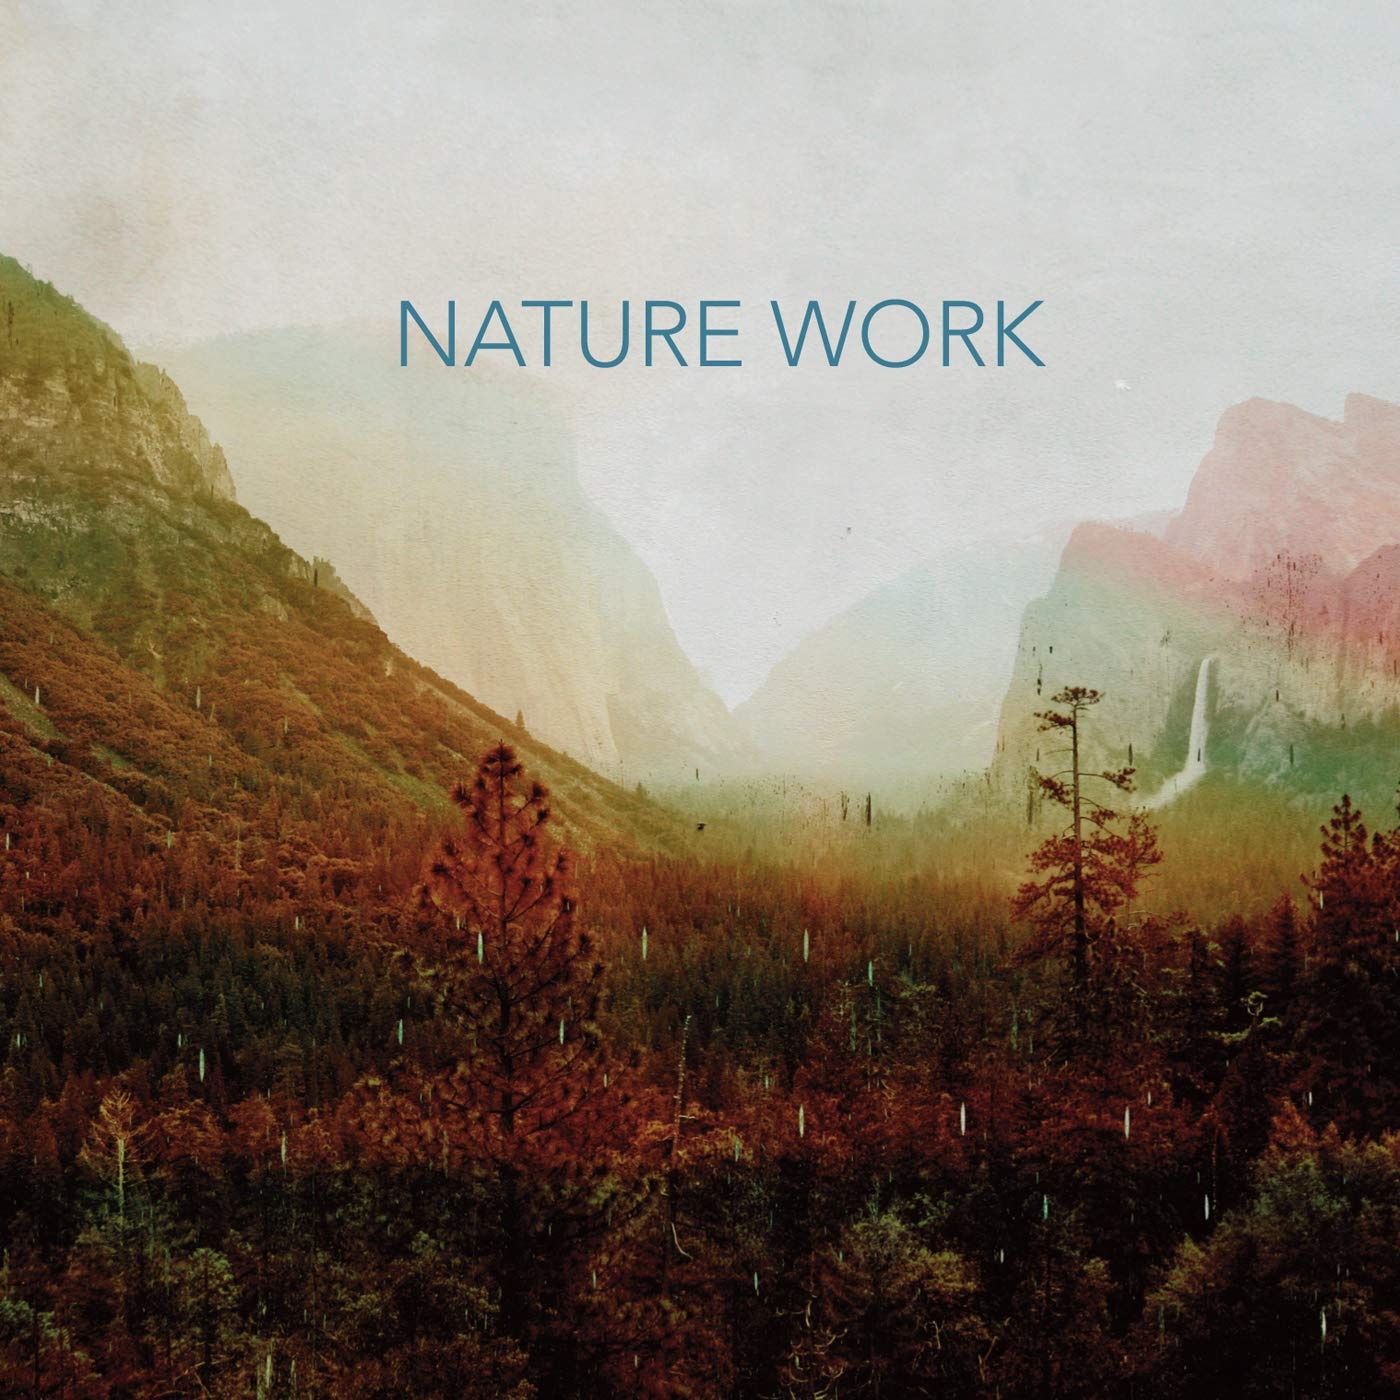 Nature работа. Обложка природа. Обложка альбома природа. Nature by nature обложки альбомов. Статья в nature.